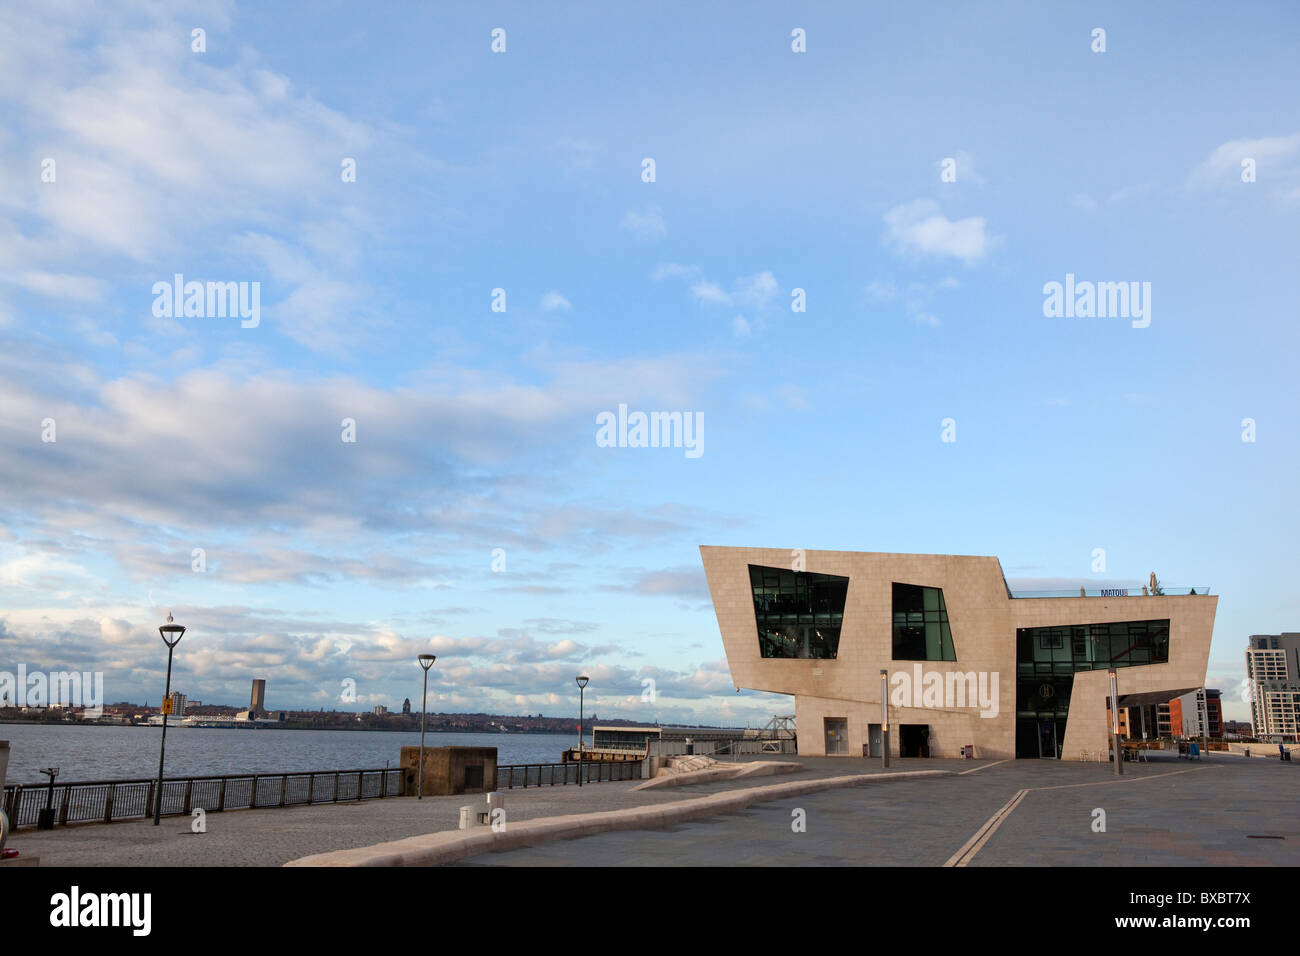 Liverpool Pier Head Ferry Terminal, Stock Photo